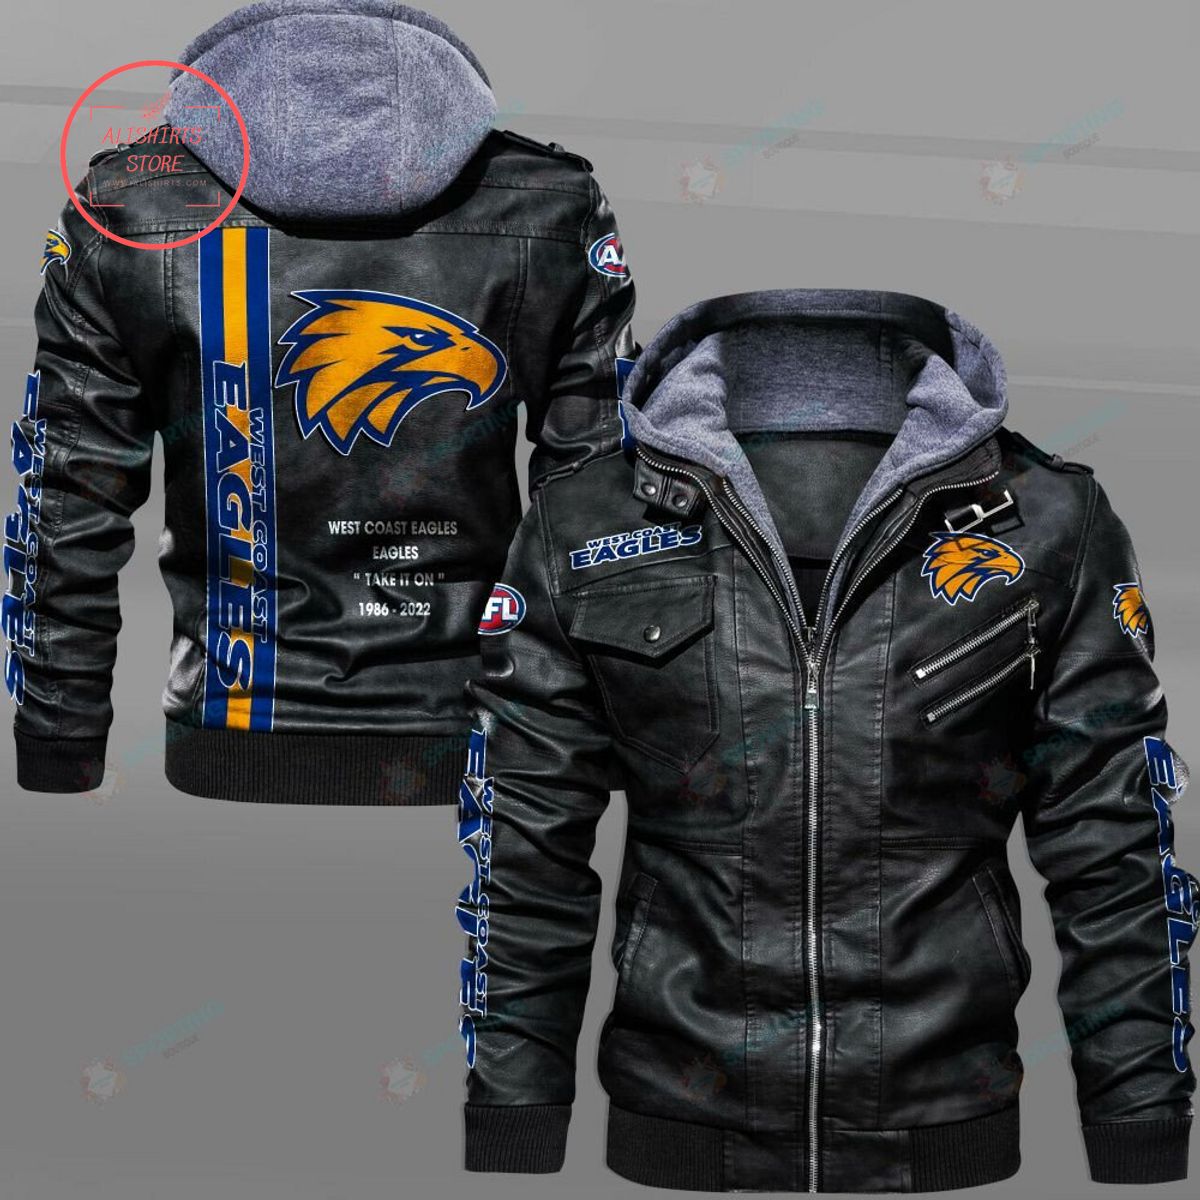 AFL West Coast Eagles Football Club Motto Leather Jacket Hooded Fleece For Fan